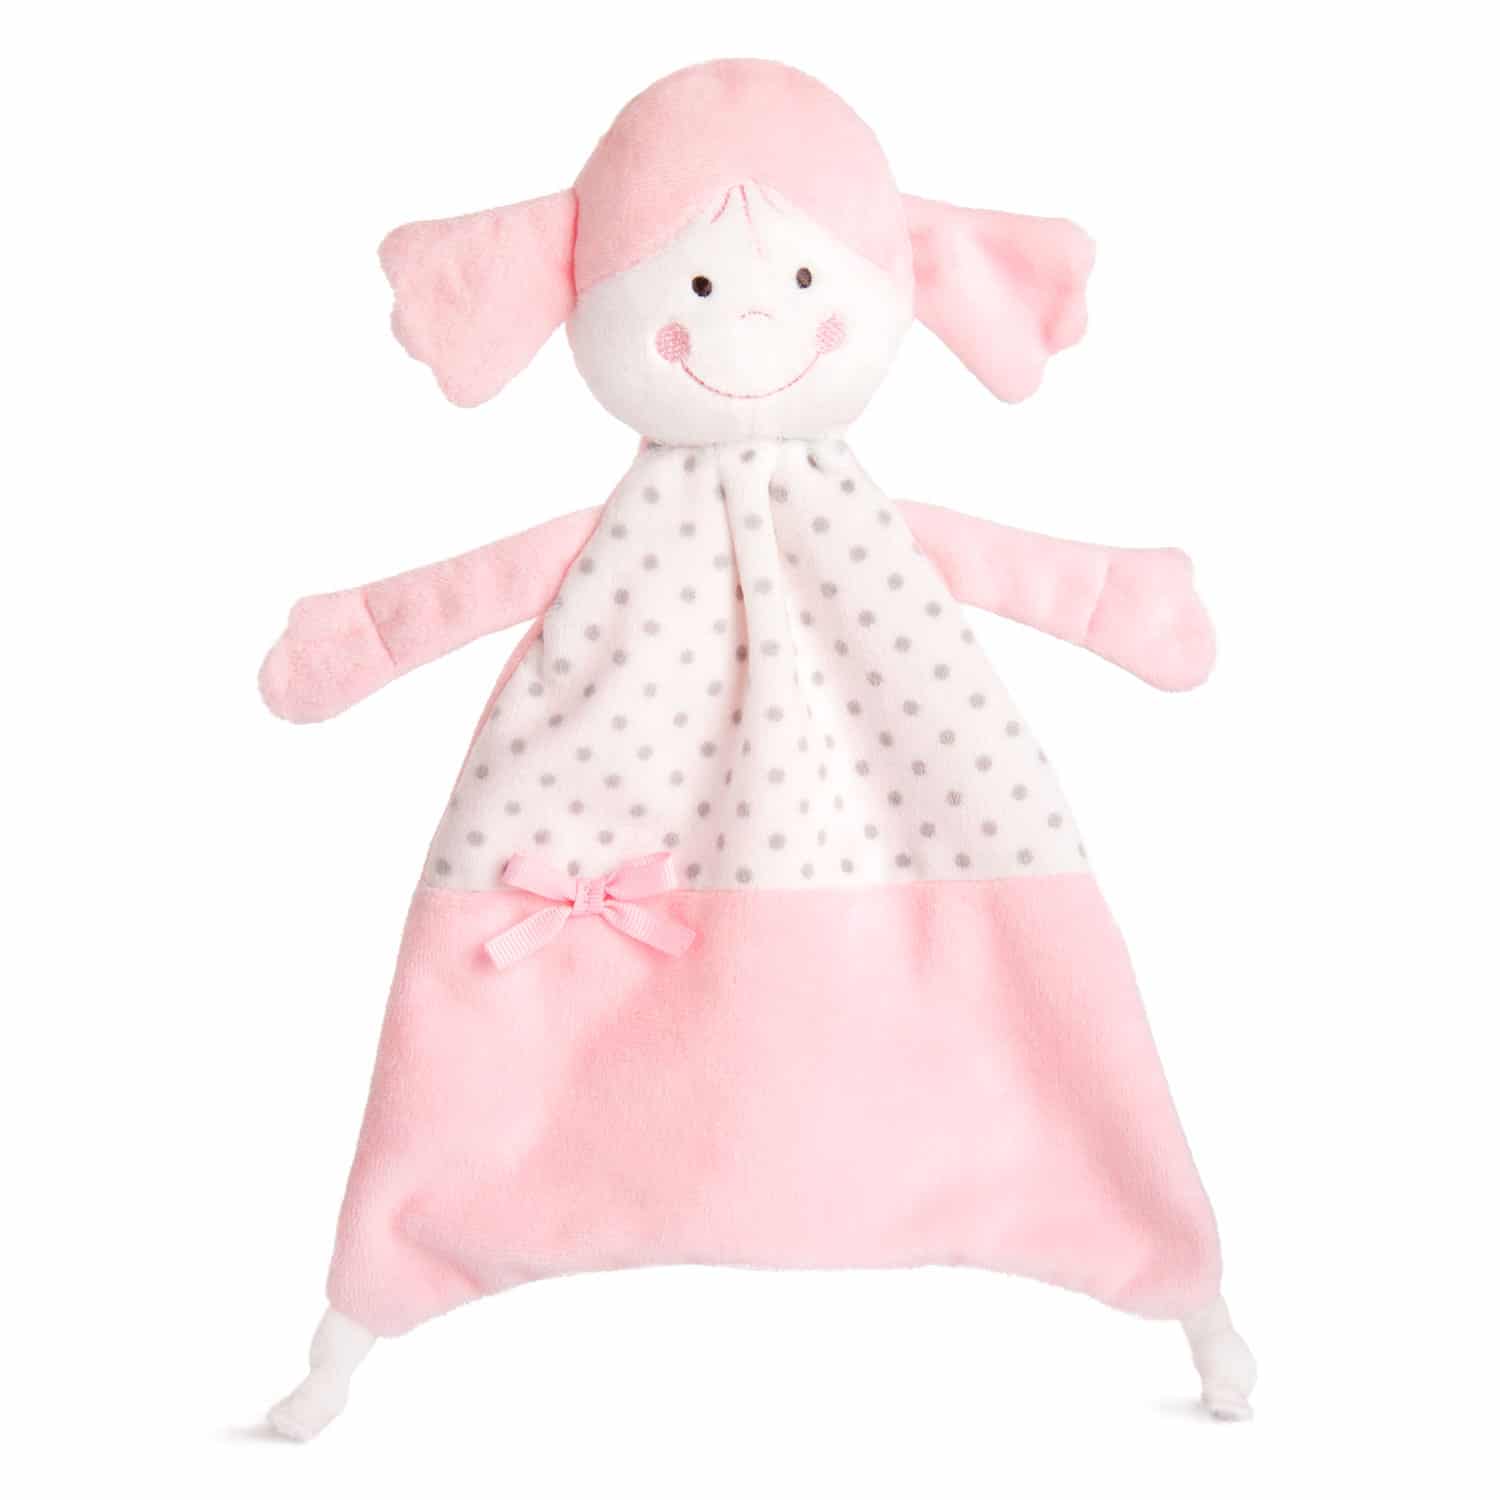 Soft doll for hugging - Pink